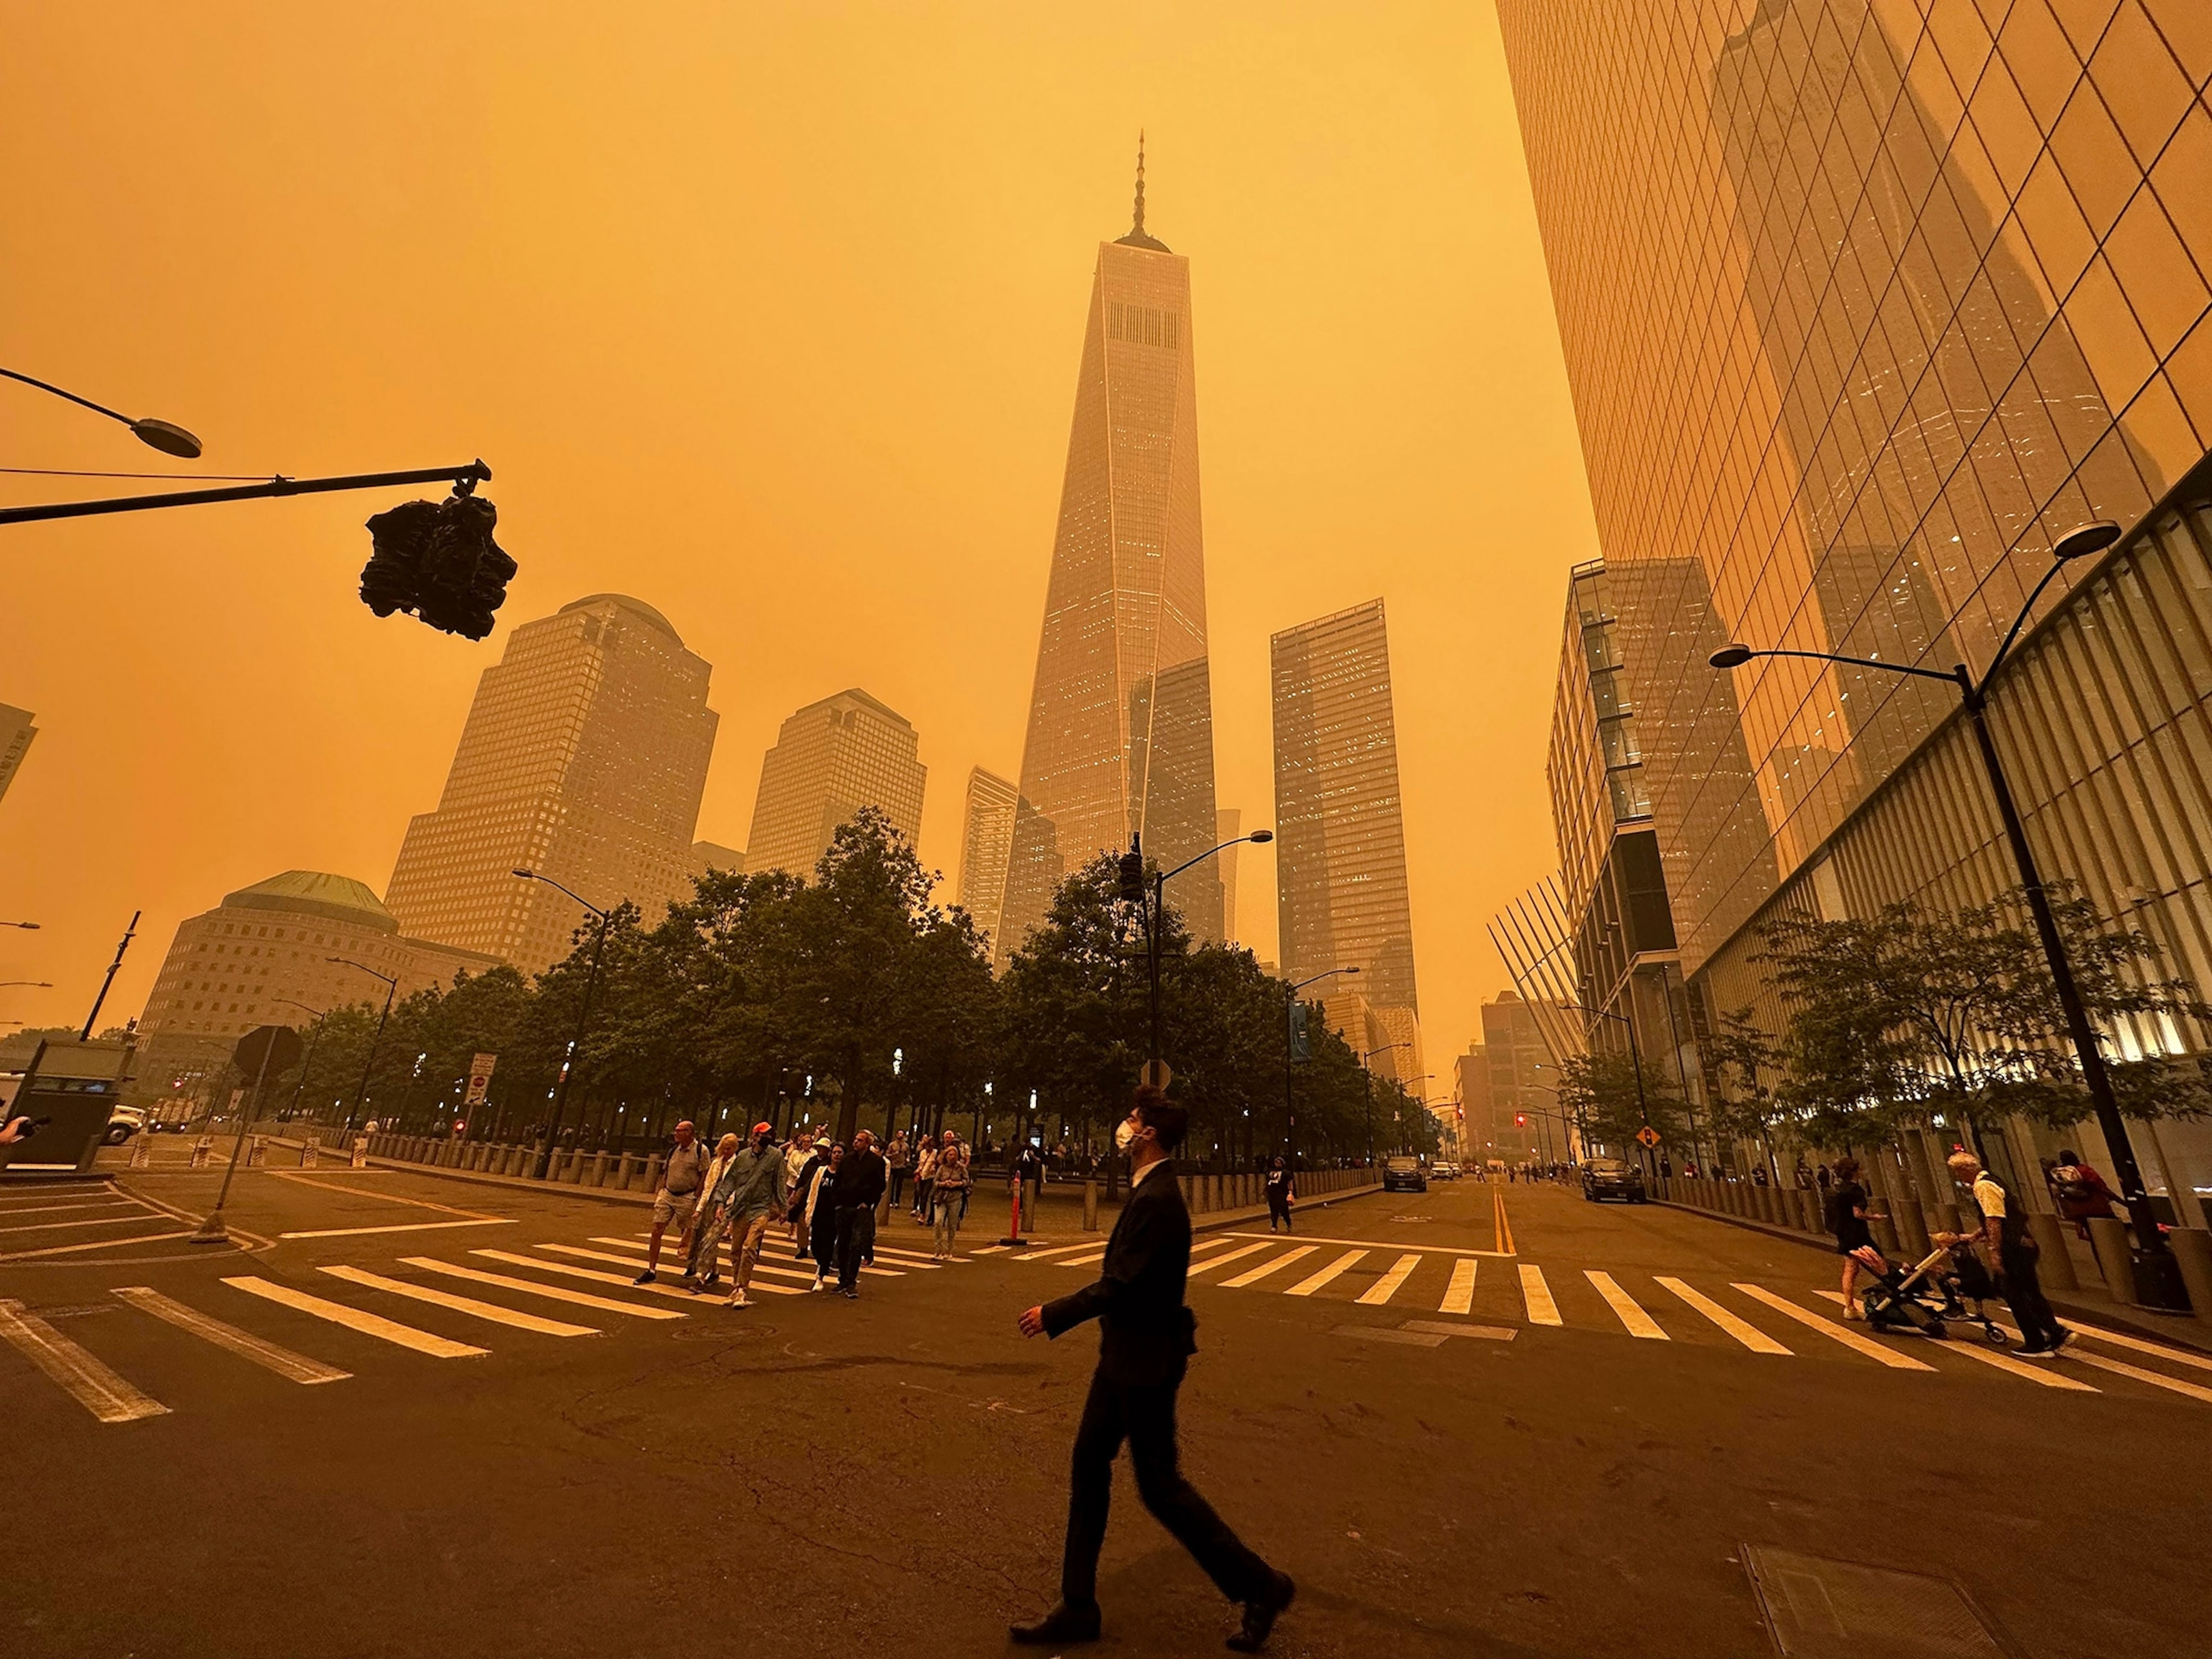 A Man crosses an intersection deep orange haze colors the city.